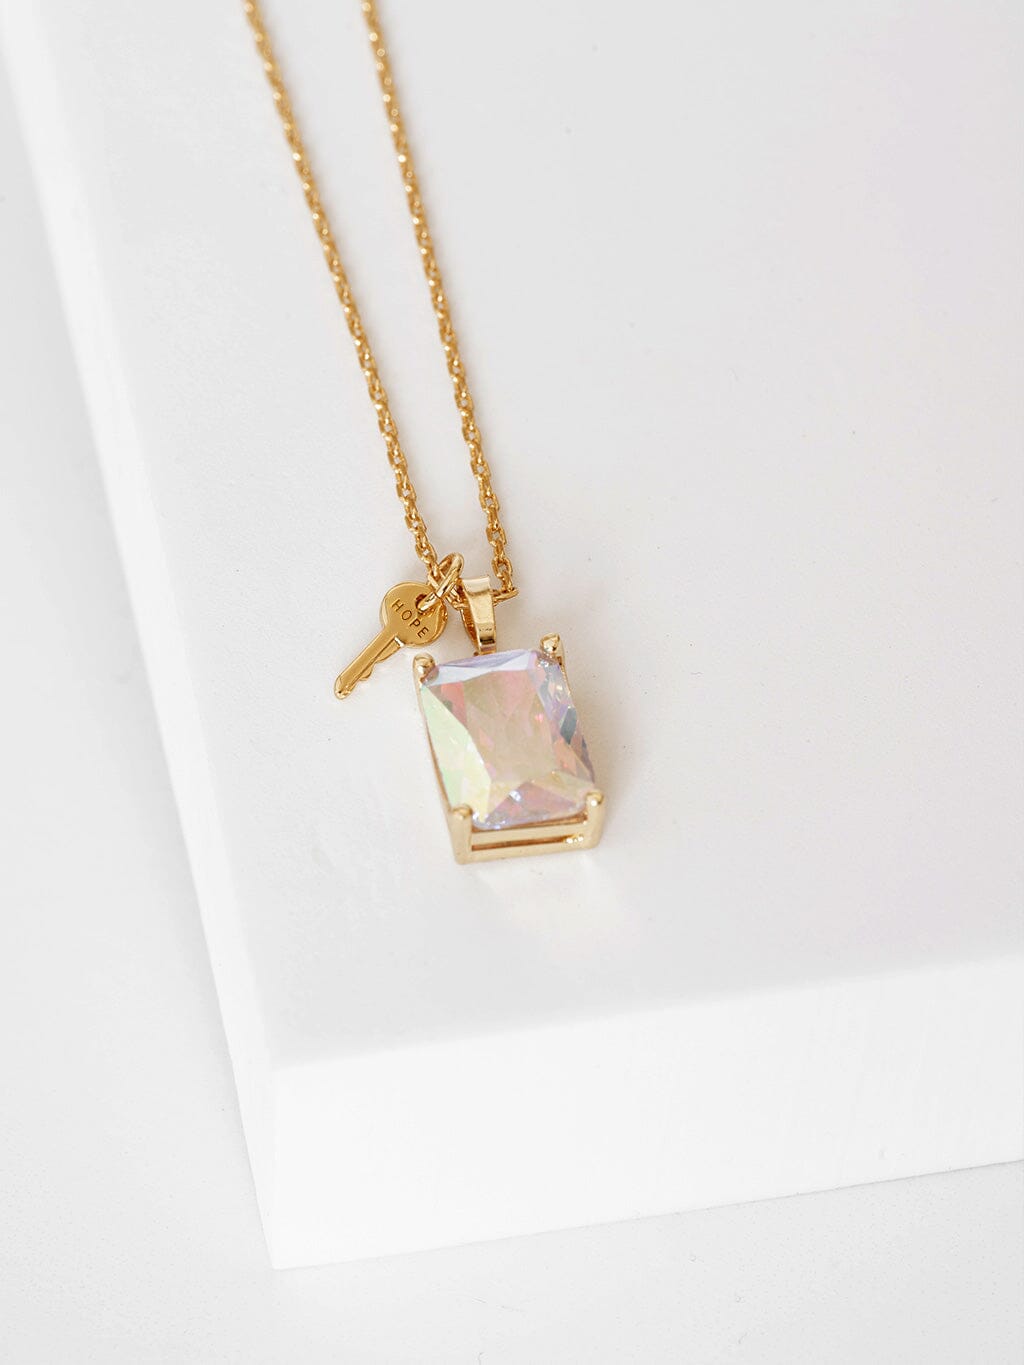 Emerald Cut Gemstone and Mini Key Necklace Necklaces The Giving Keys Gold HOPE / Aurora Borealis 